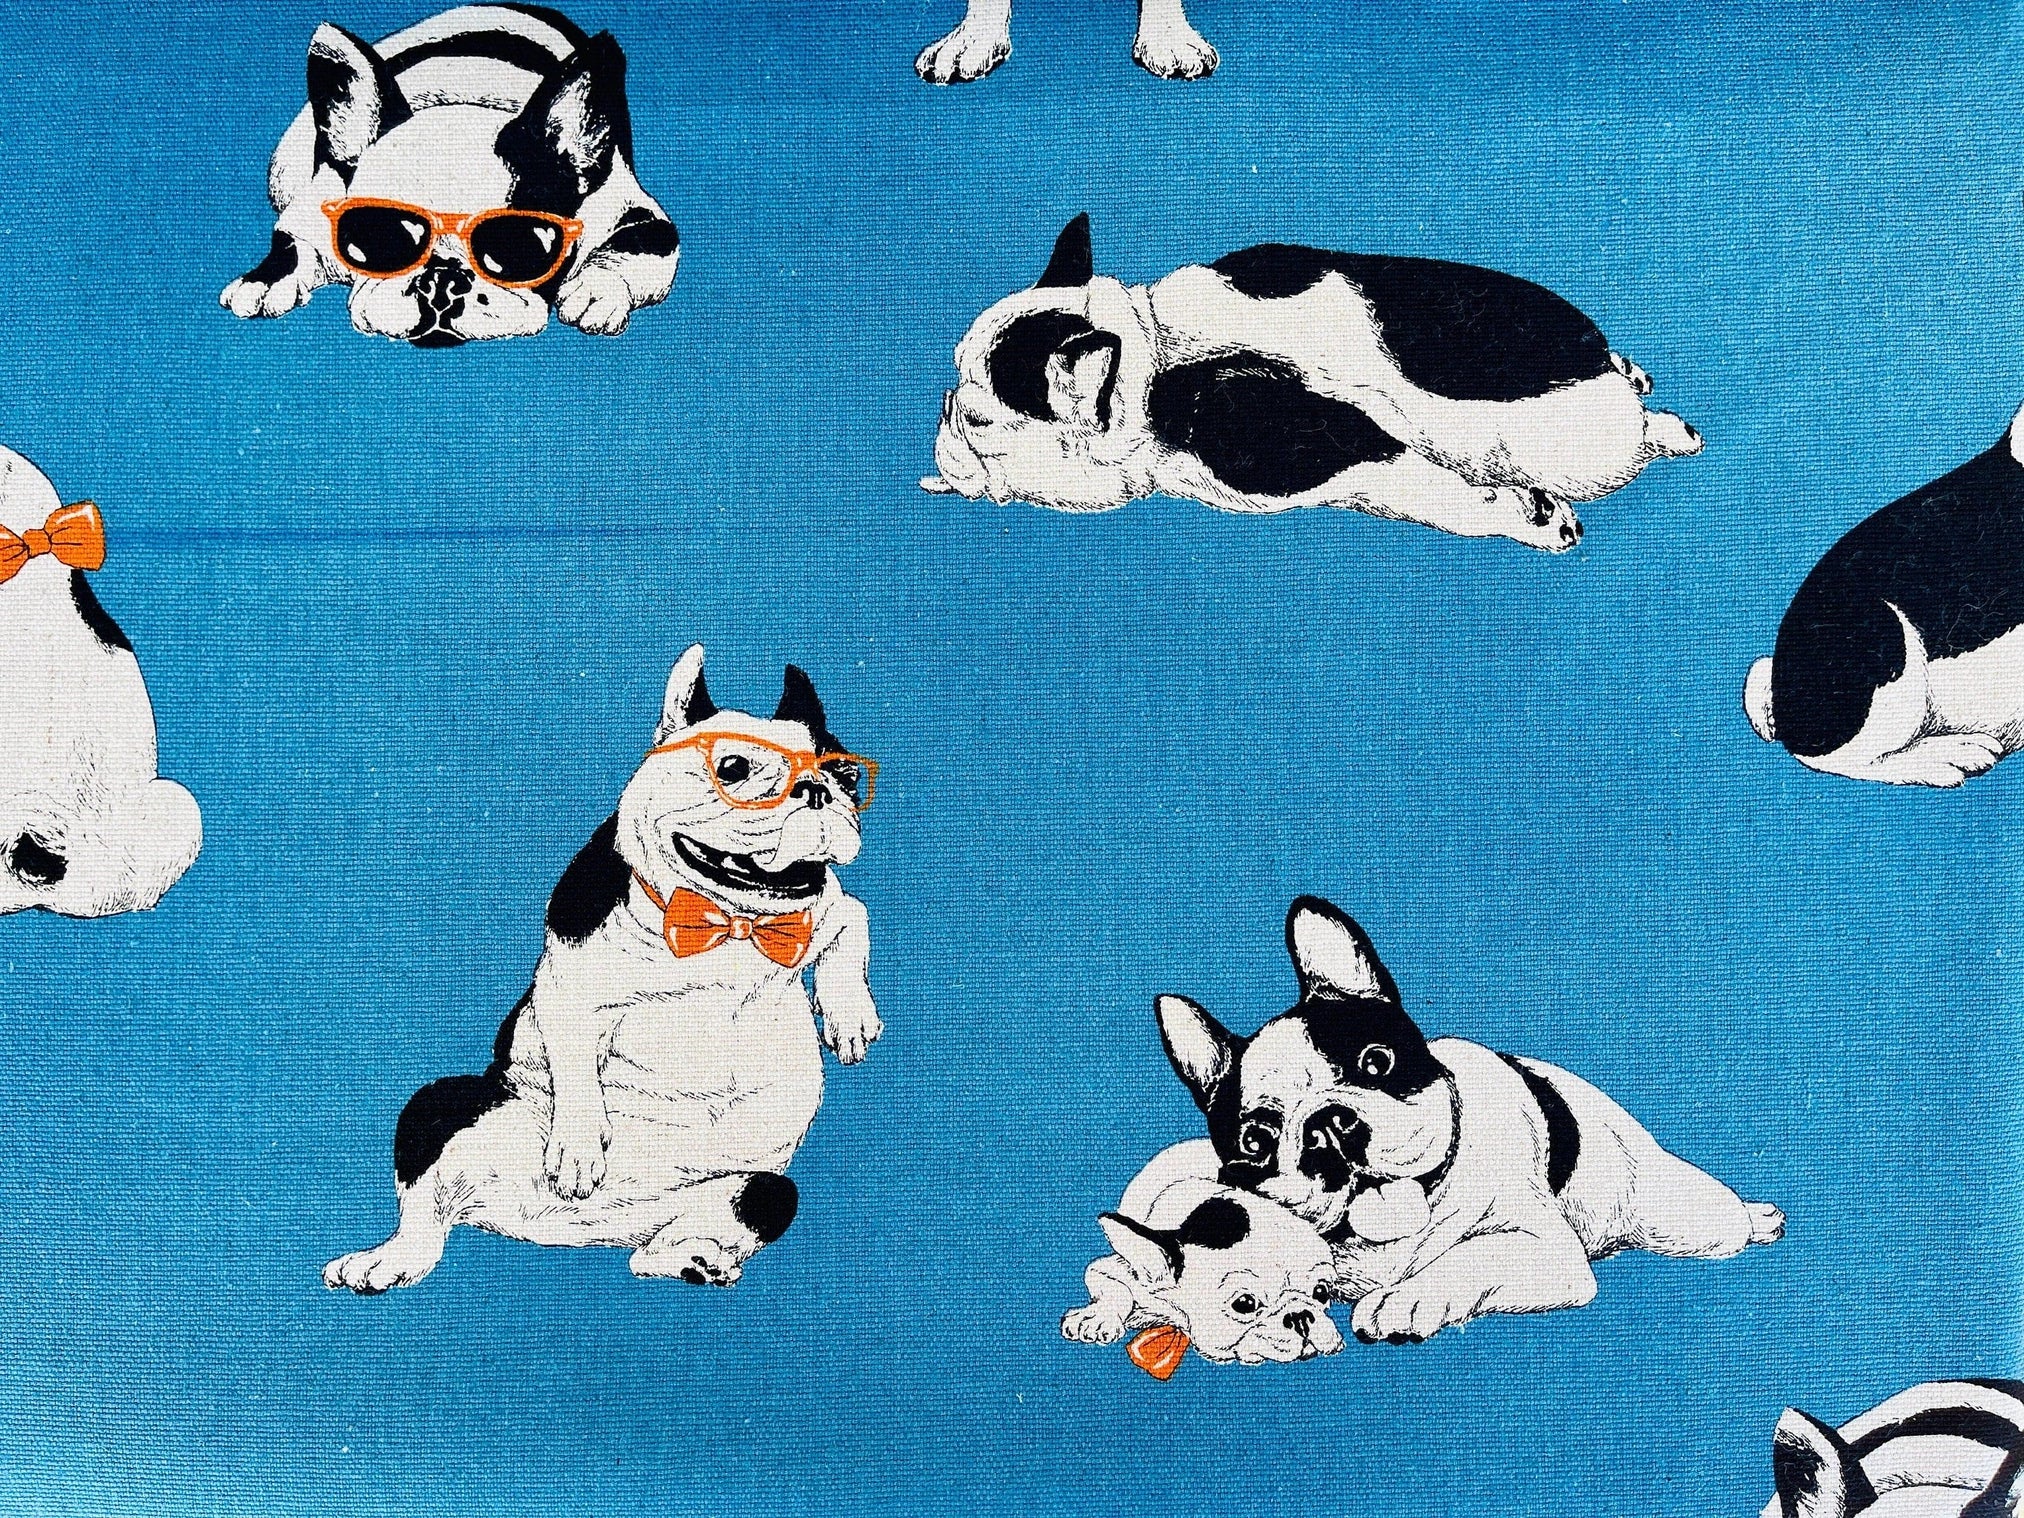 Dog - French Bulldog Fabric - Japanese Linen Cotton Oxford Fabric